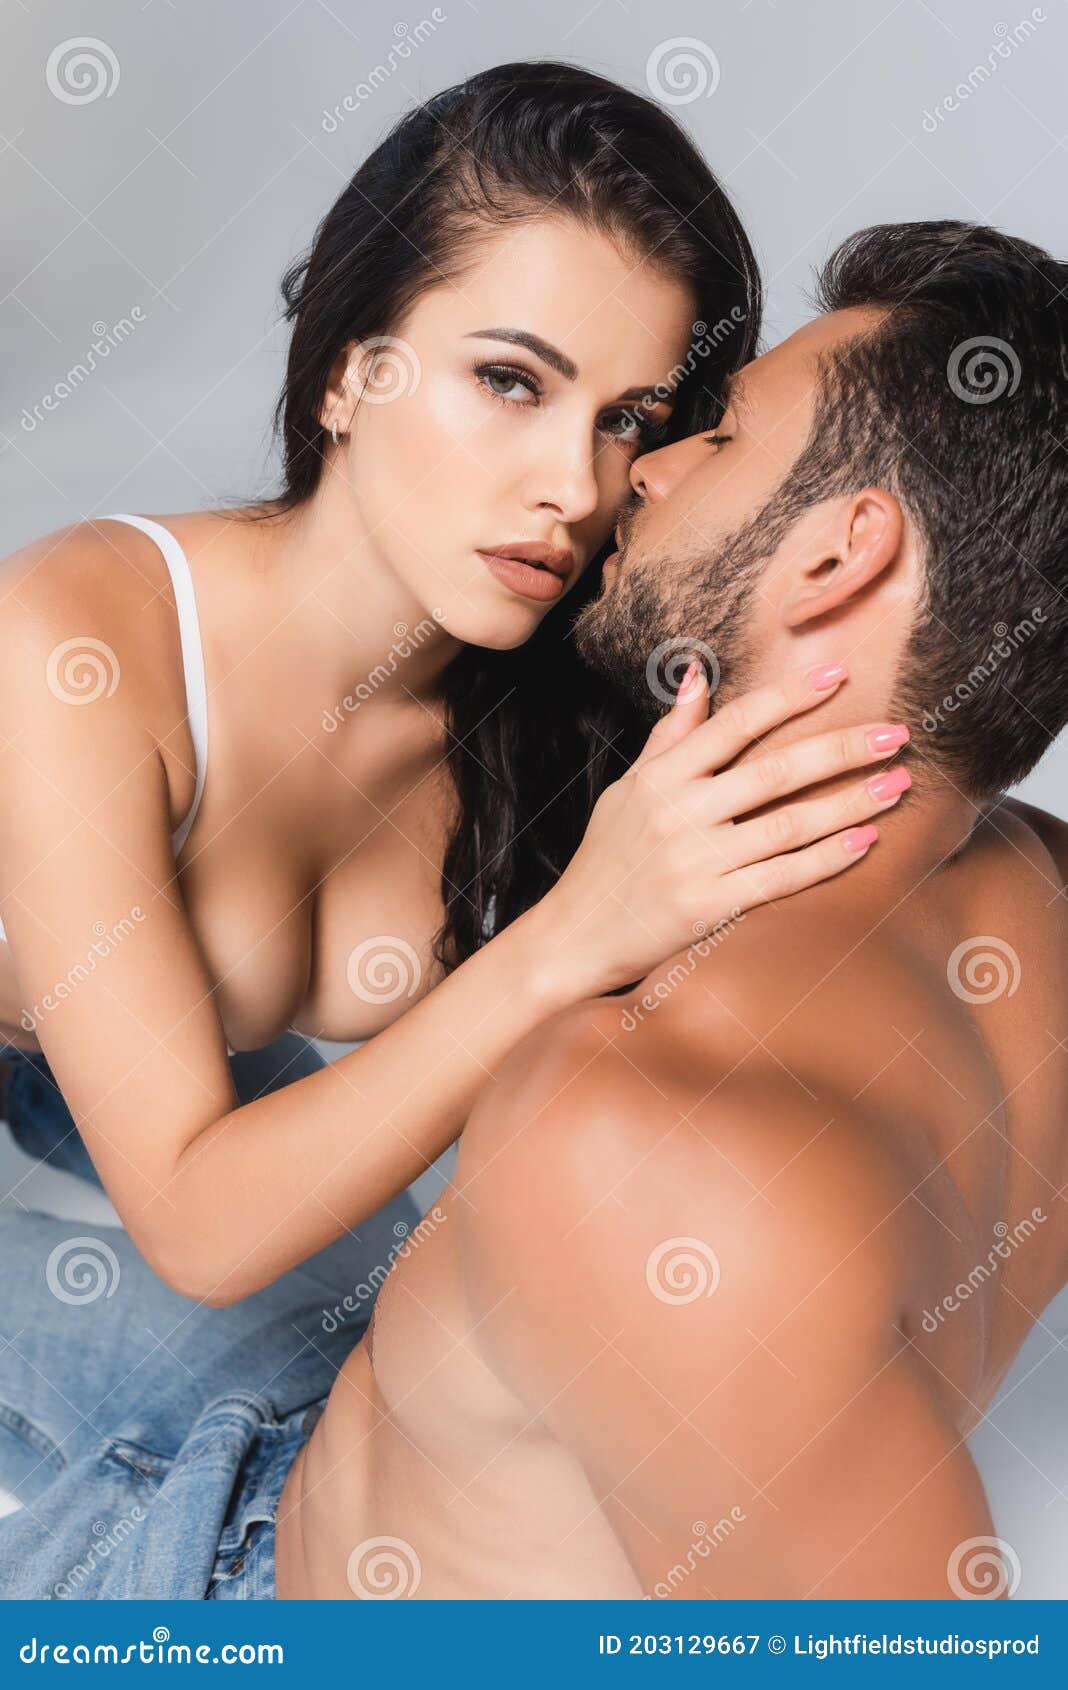 aqua vit share boy touching girl boob photos